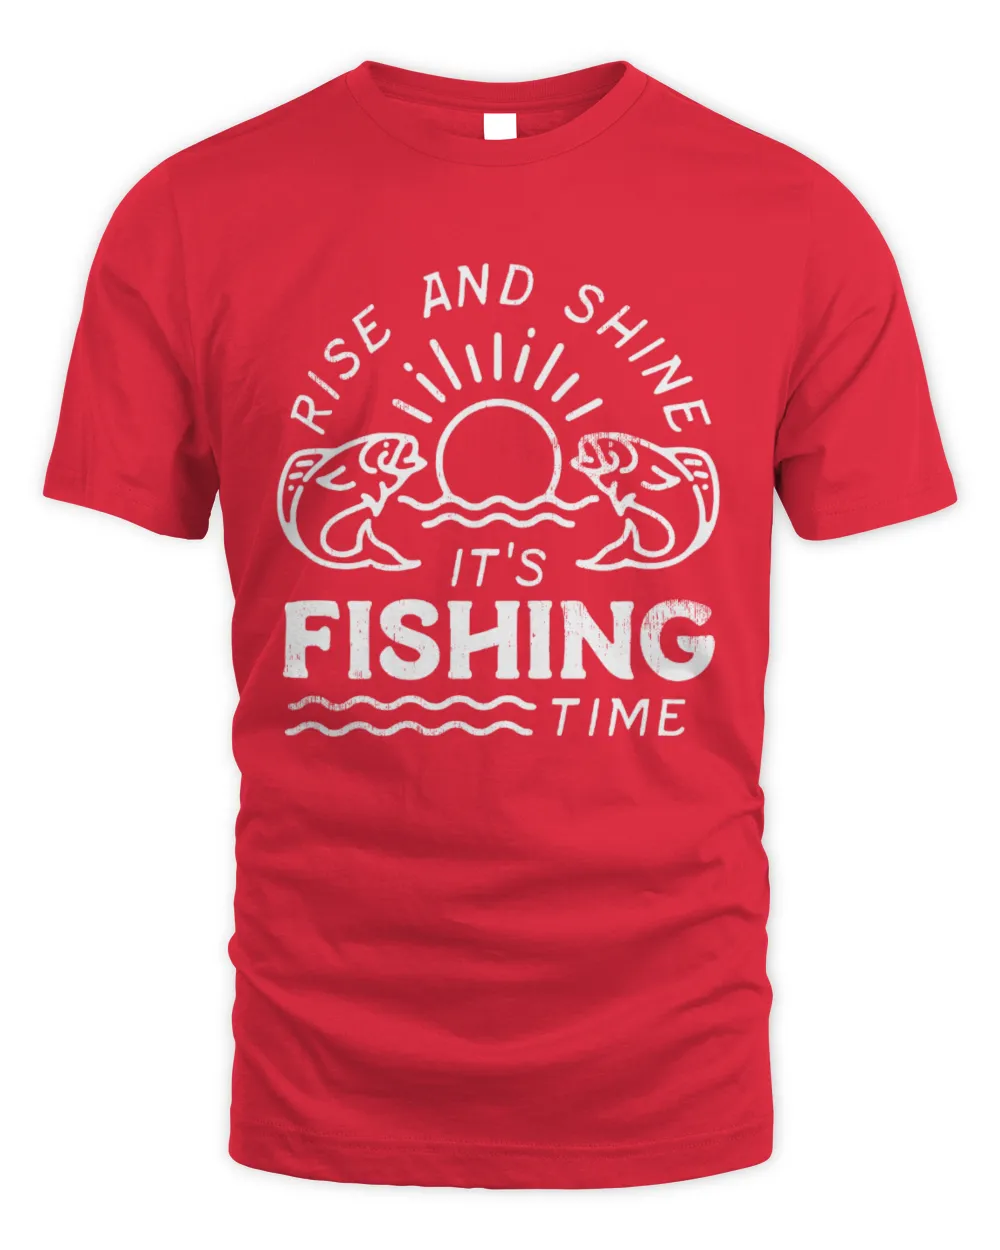 It's Fishing Time, Mens Fishing T shirt, Funny Fishing Shirt, Fishing Graphic Tee, Fisherman Gifts, Present For Fisherman, Rise And Shine